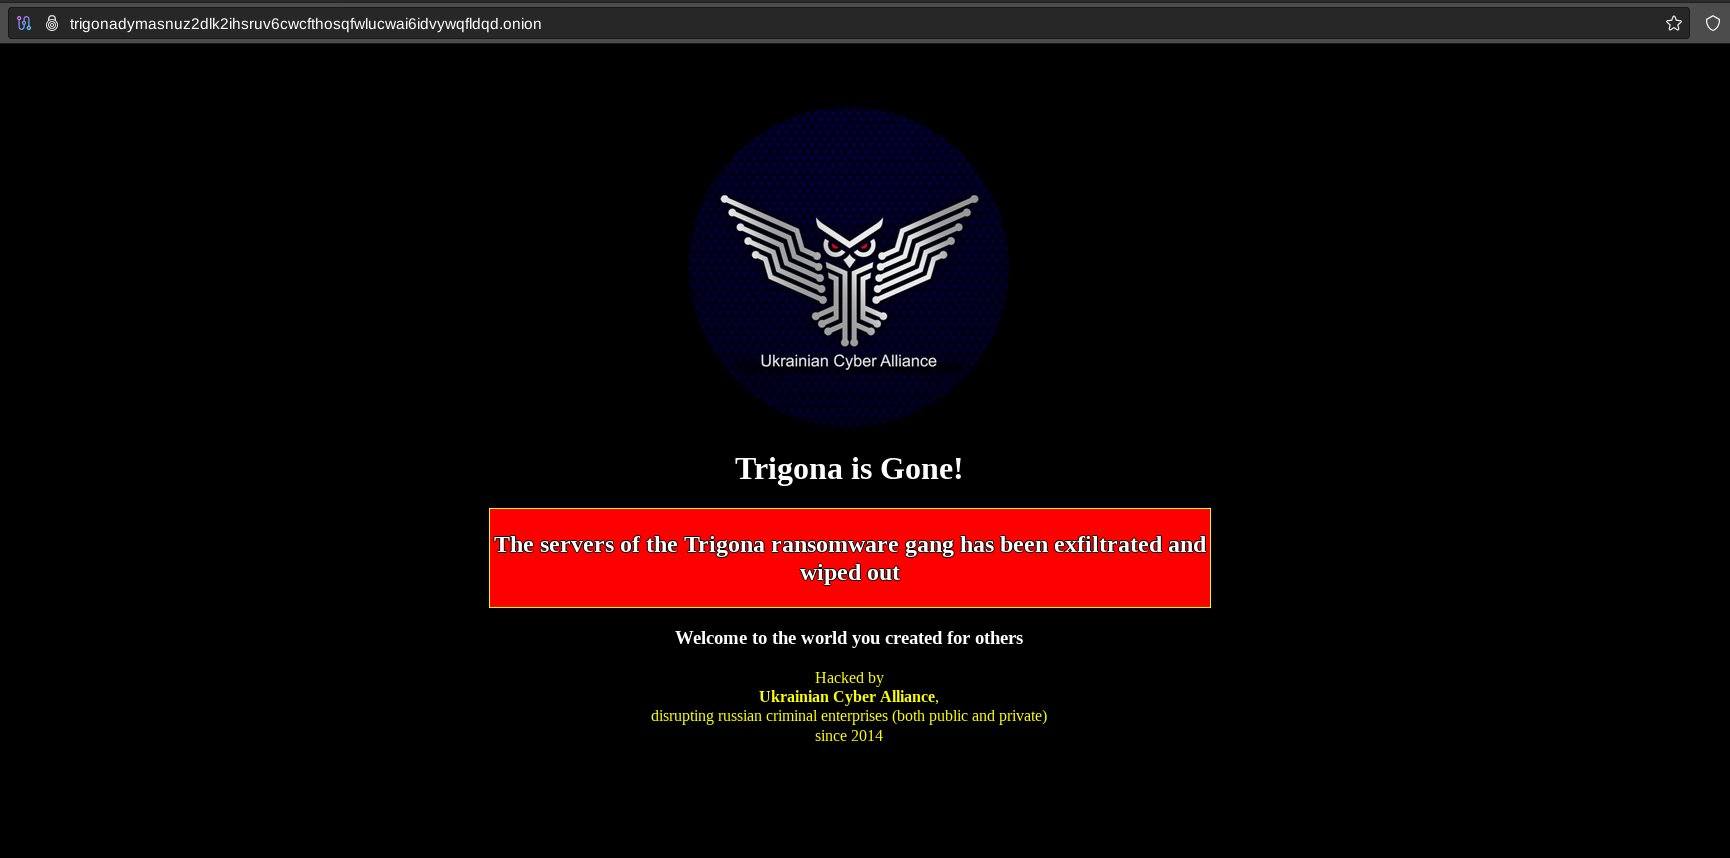 The original Modern Warfare 2 servers have been shut down following a  malware threat